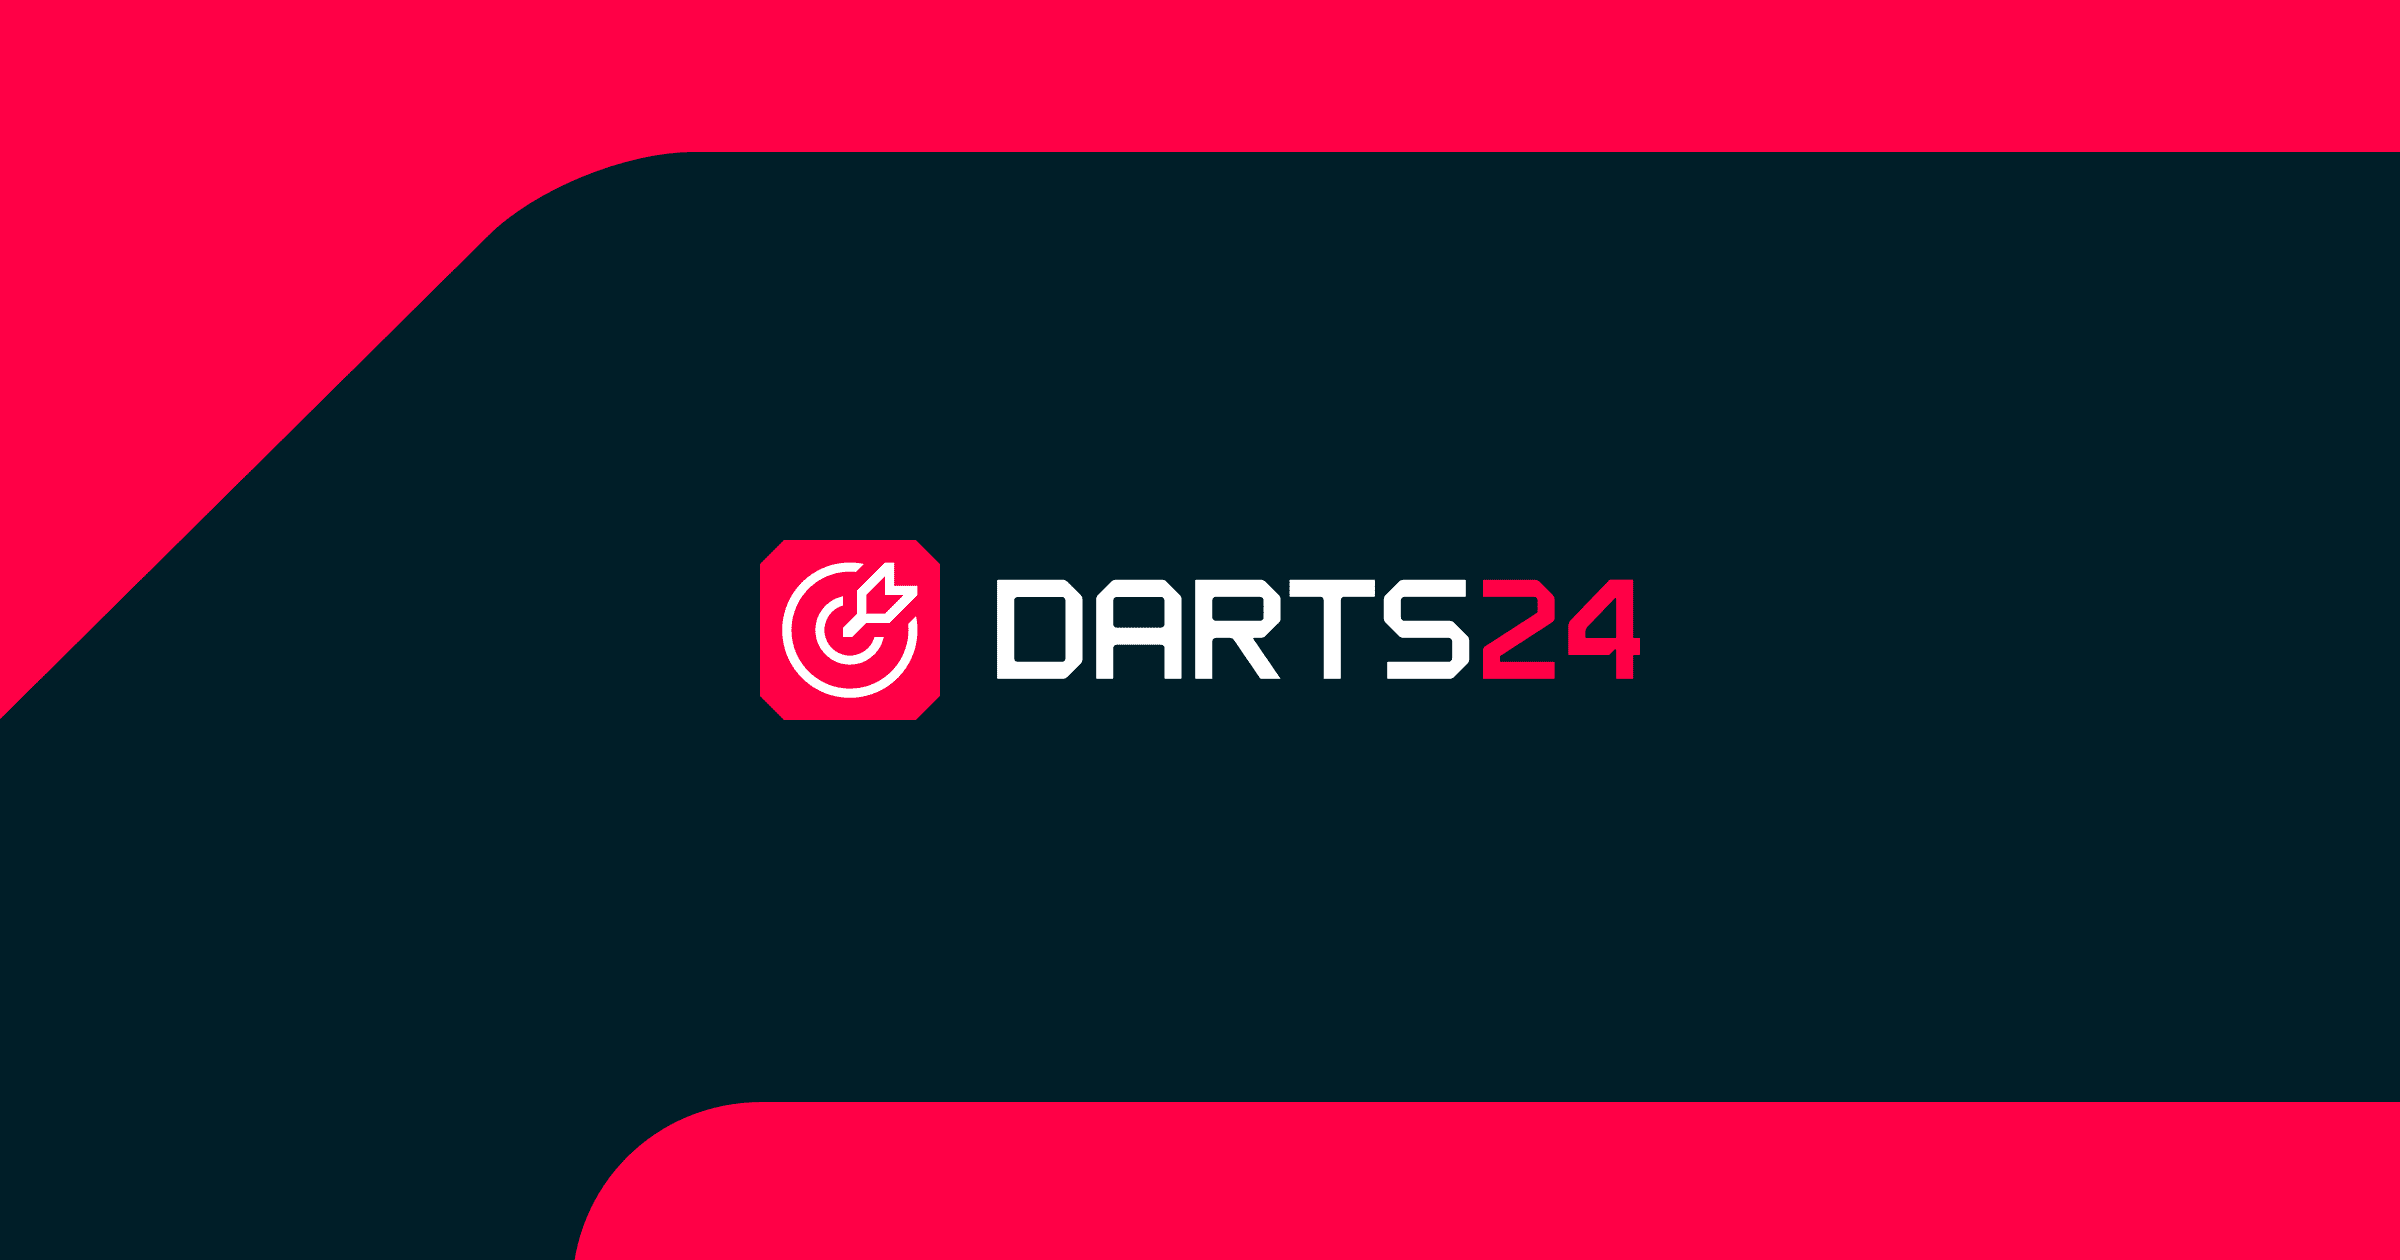 Darts 24 UK Open Live scores